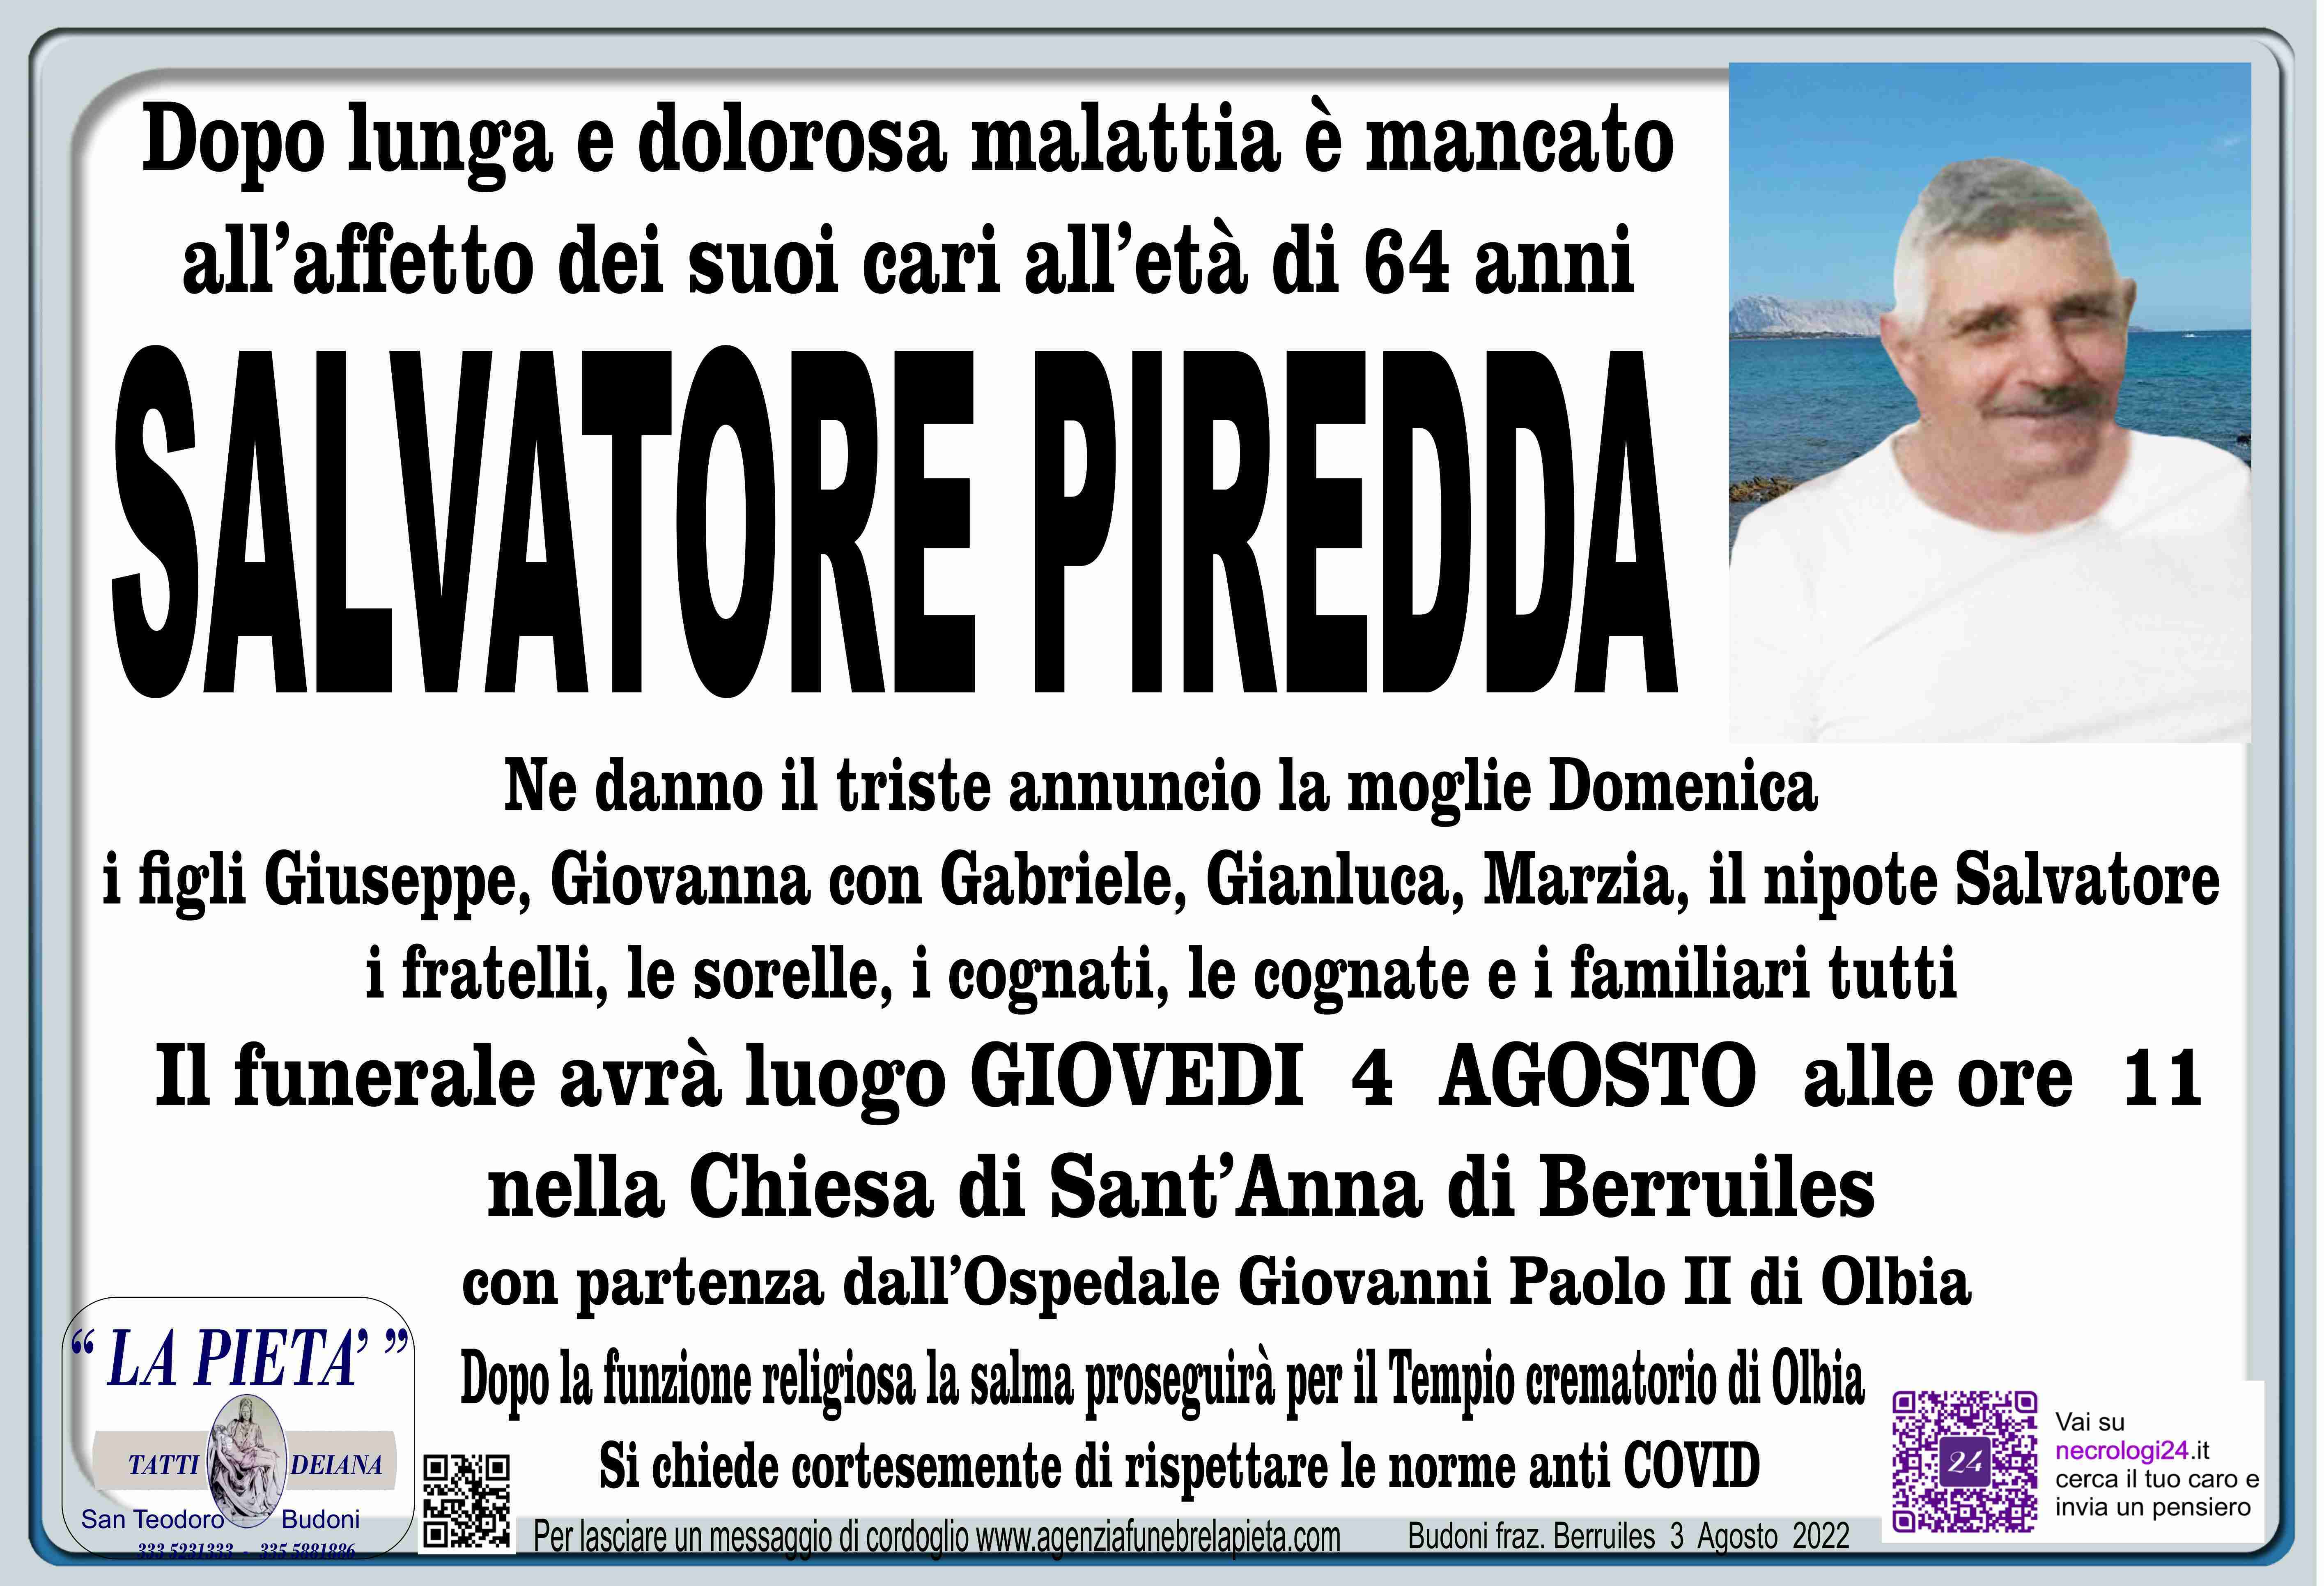 Salvatore Piredda